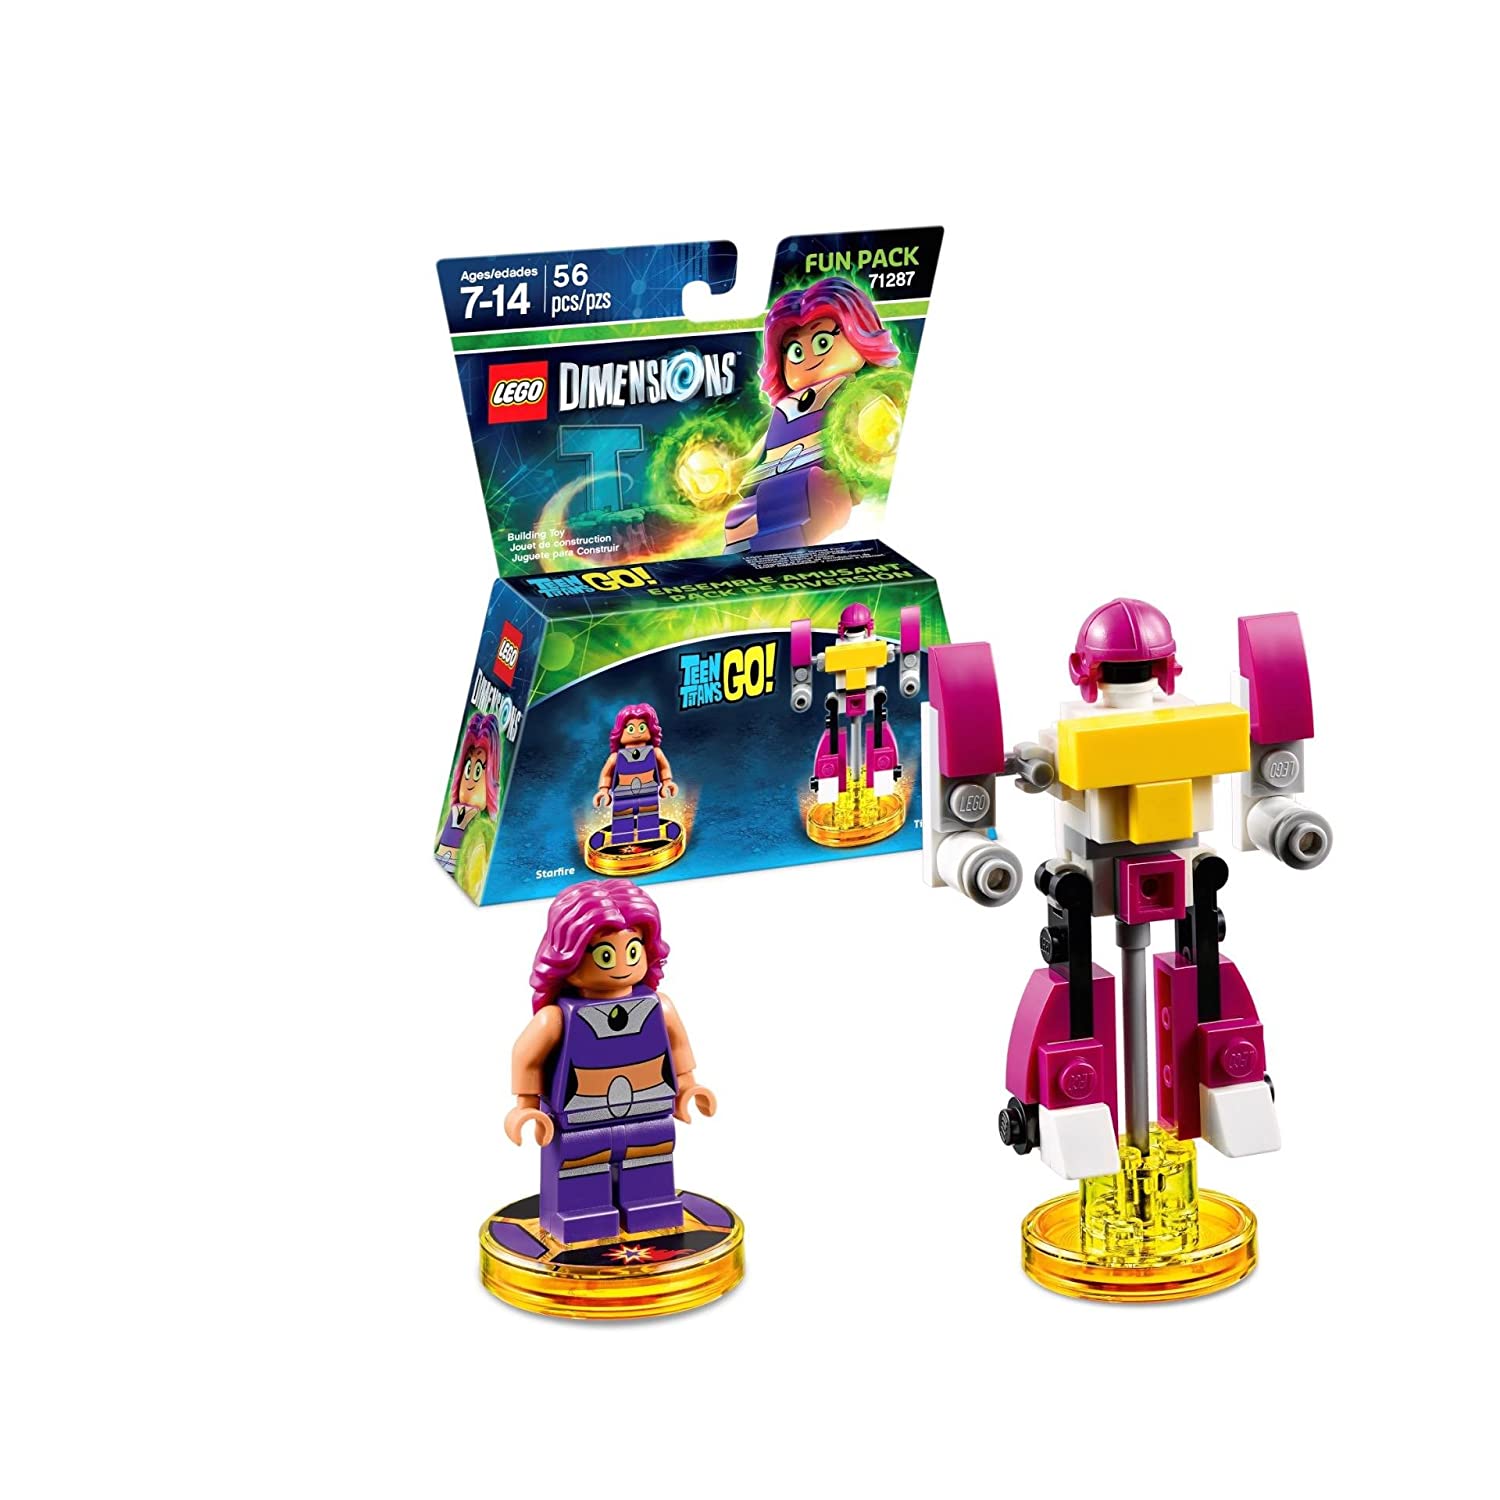 LEGO Dimensions - Fun Pack (71287) - Teen Titans Go! (Starfire, Titan Robot)